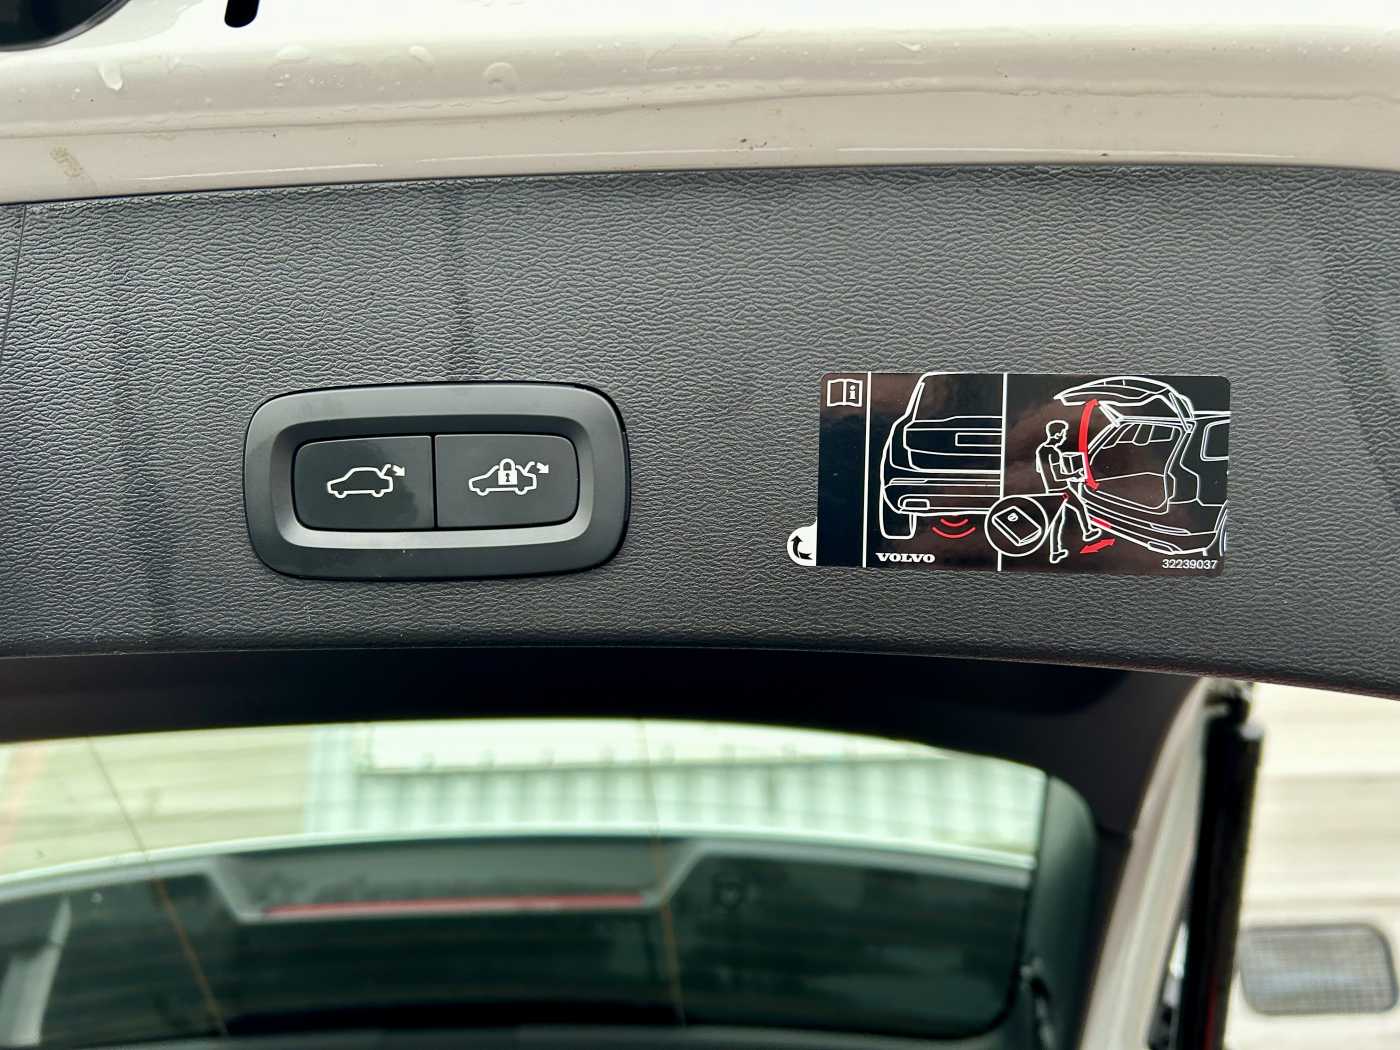 Lacom Volvo - XC40 T4 Inscription Expression Plug-in/WinterPro/Trekhaak/ACC